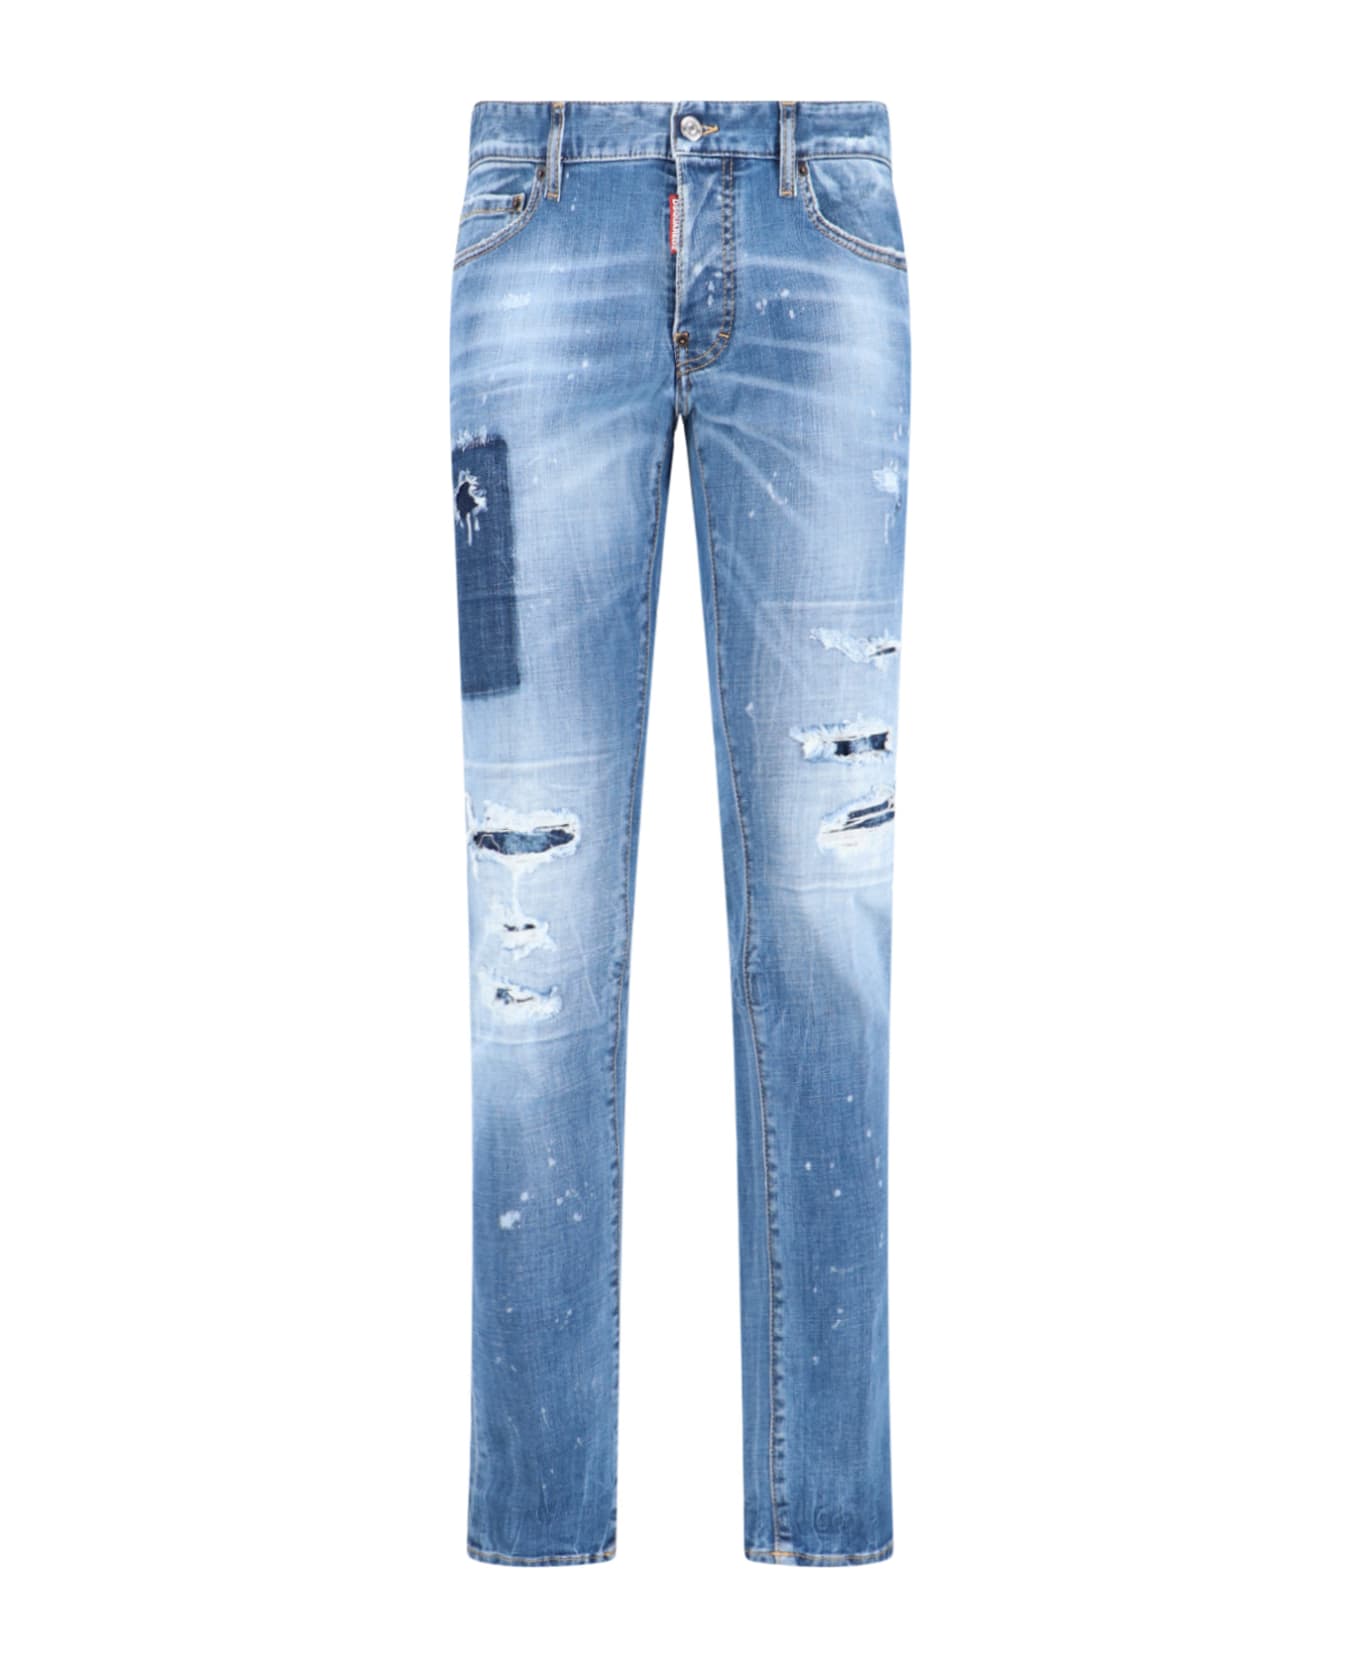 Dsquared2 Jeans - Light blue